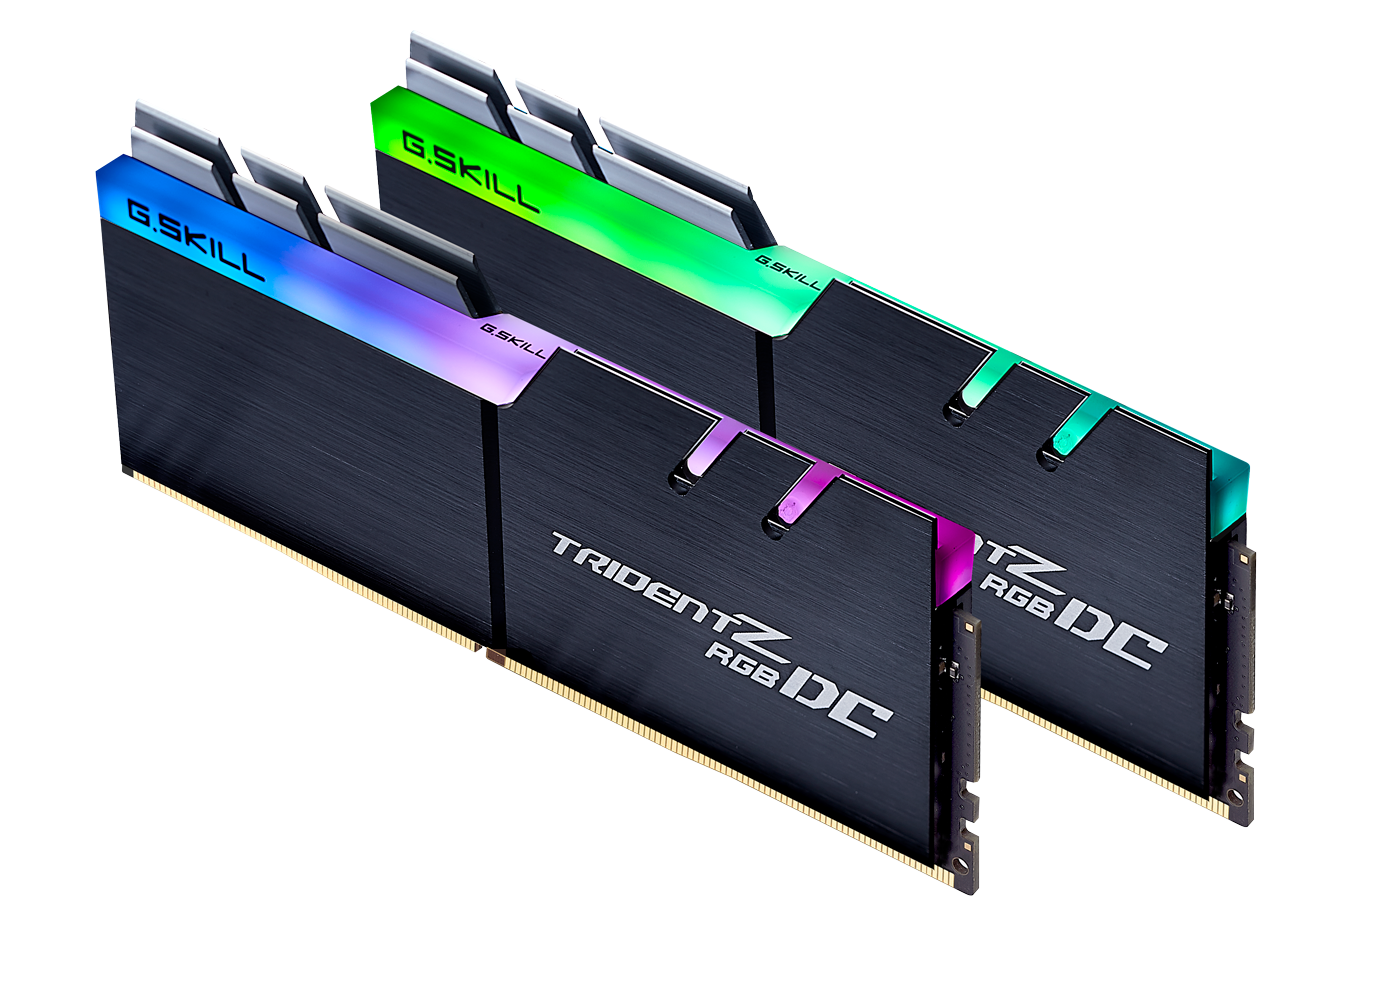 G.SKILL เปิดตัวแรม Trident Z RGB DC Series DDR4 64GB (32GBx2) รุ่นใหม่ล่าสุดรองรับเมนบอร์ด Z390 เต็มรูปแบบด้วยเทคโนโลยี Double Capacity DIMM Technology ที่ใช้แรมแค่ 1คู่แต่ความจุมากถึง 64GB